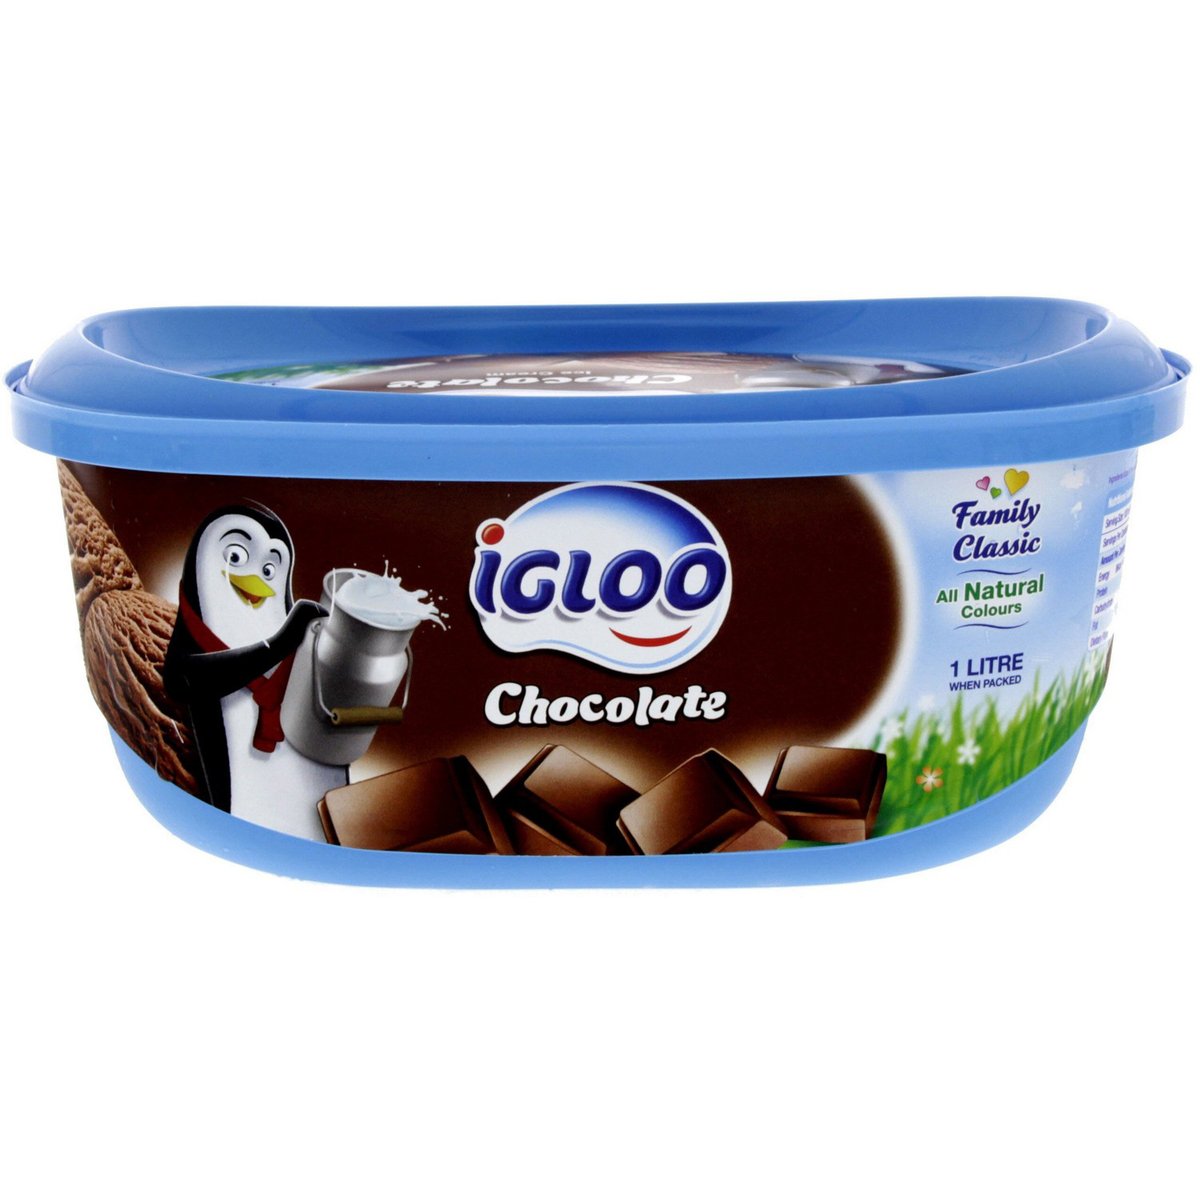 Buy Igloo Chocolate Ice Cream 1 Litre Online at Best Price | Ice Cream Take Home | Lulu Kuwait in UAE